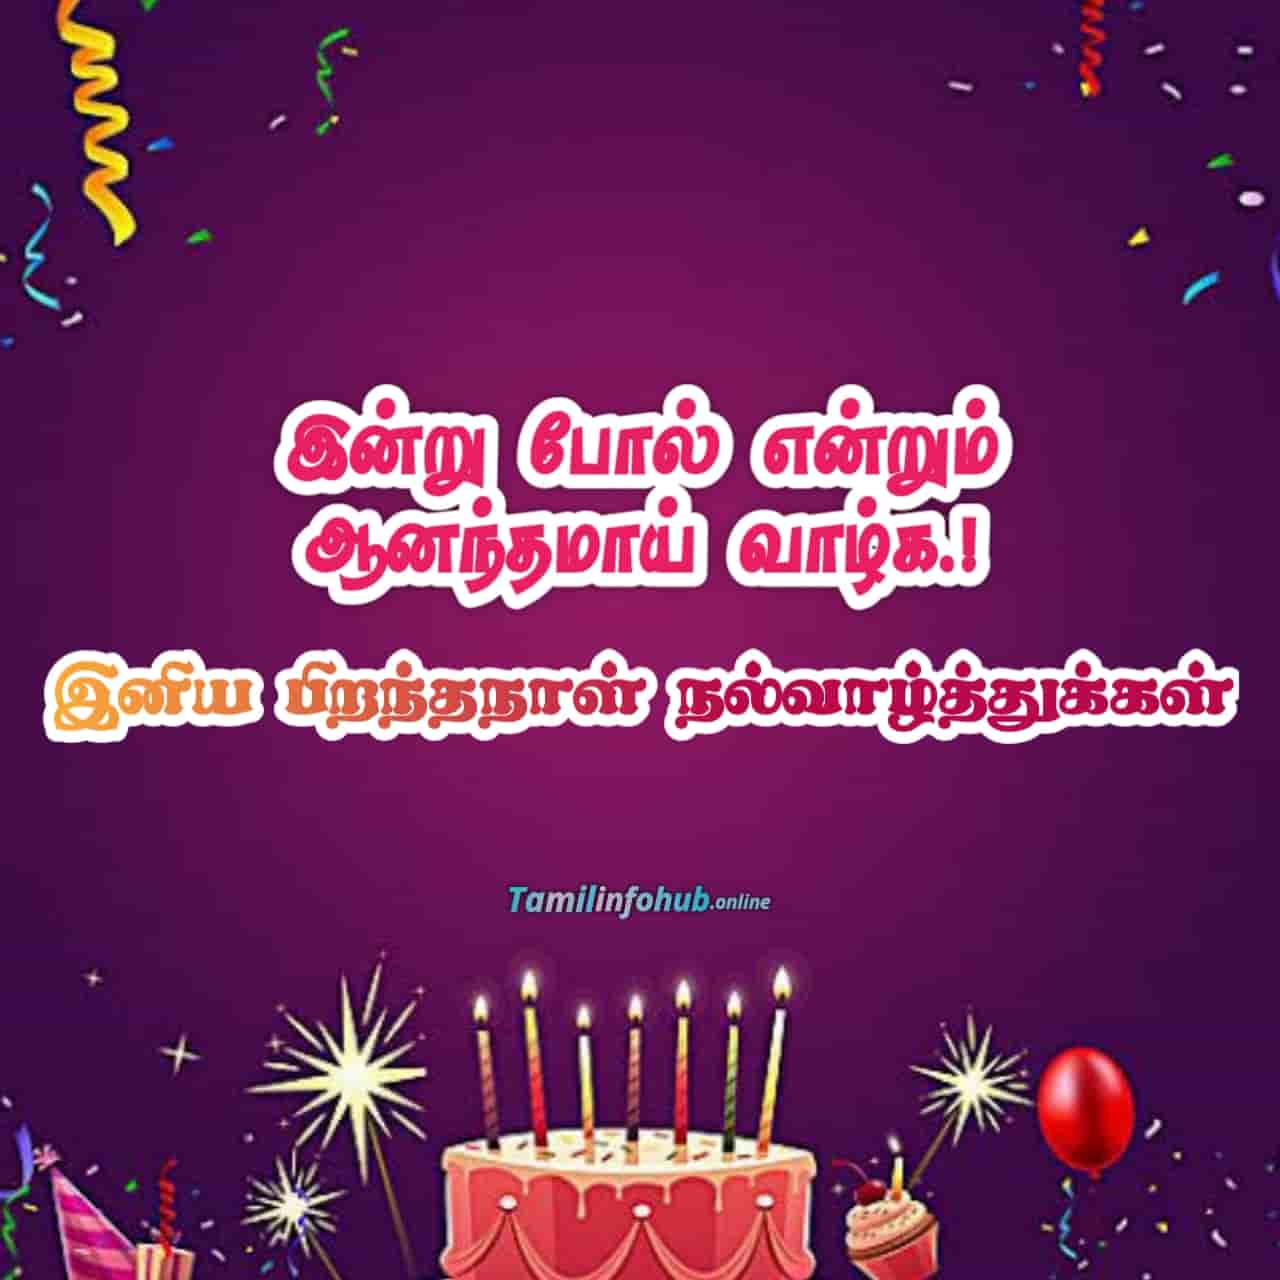 Happy birthday in Tamil